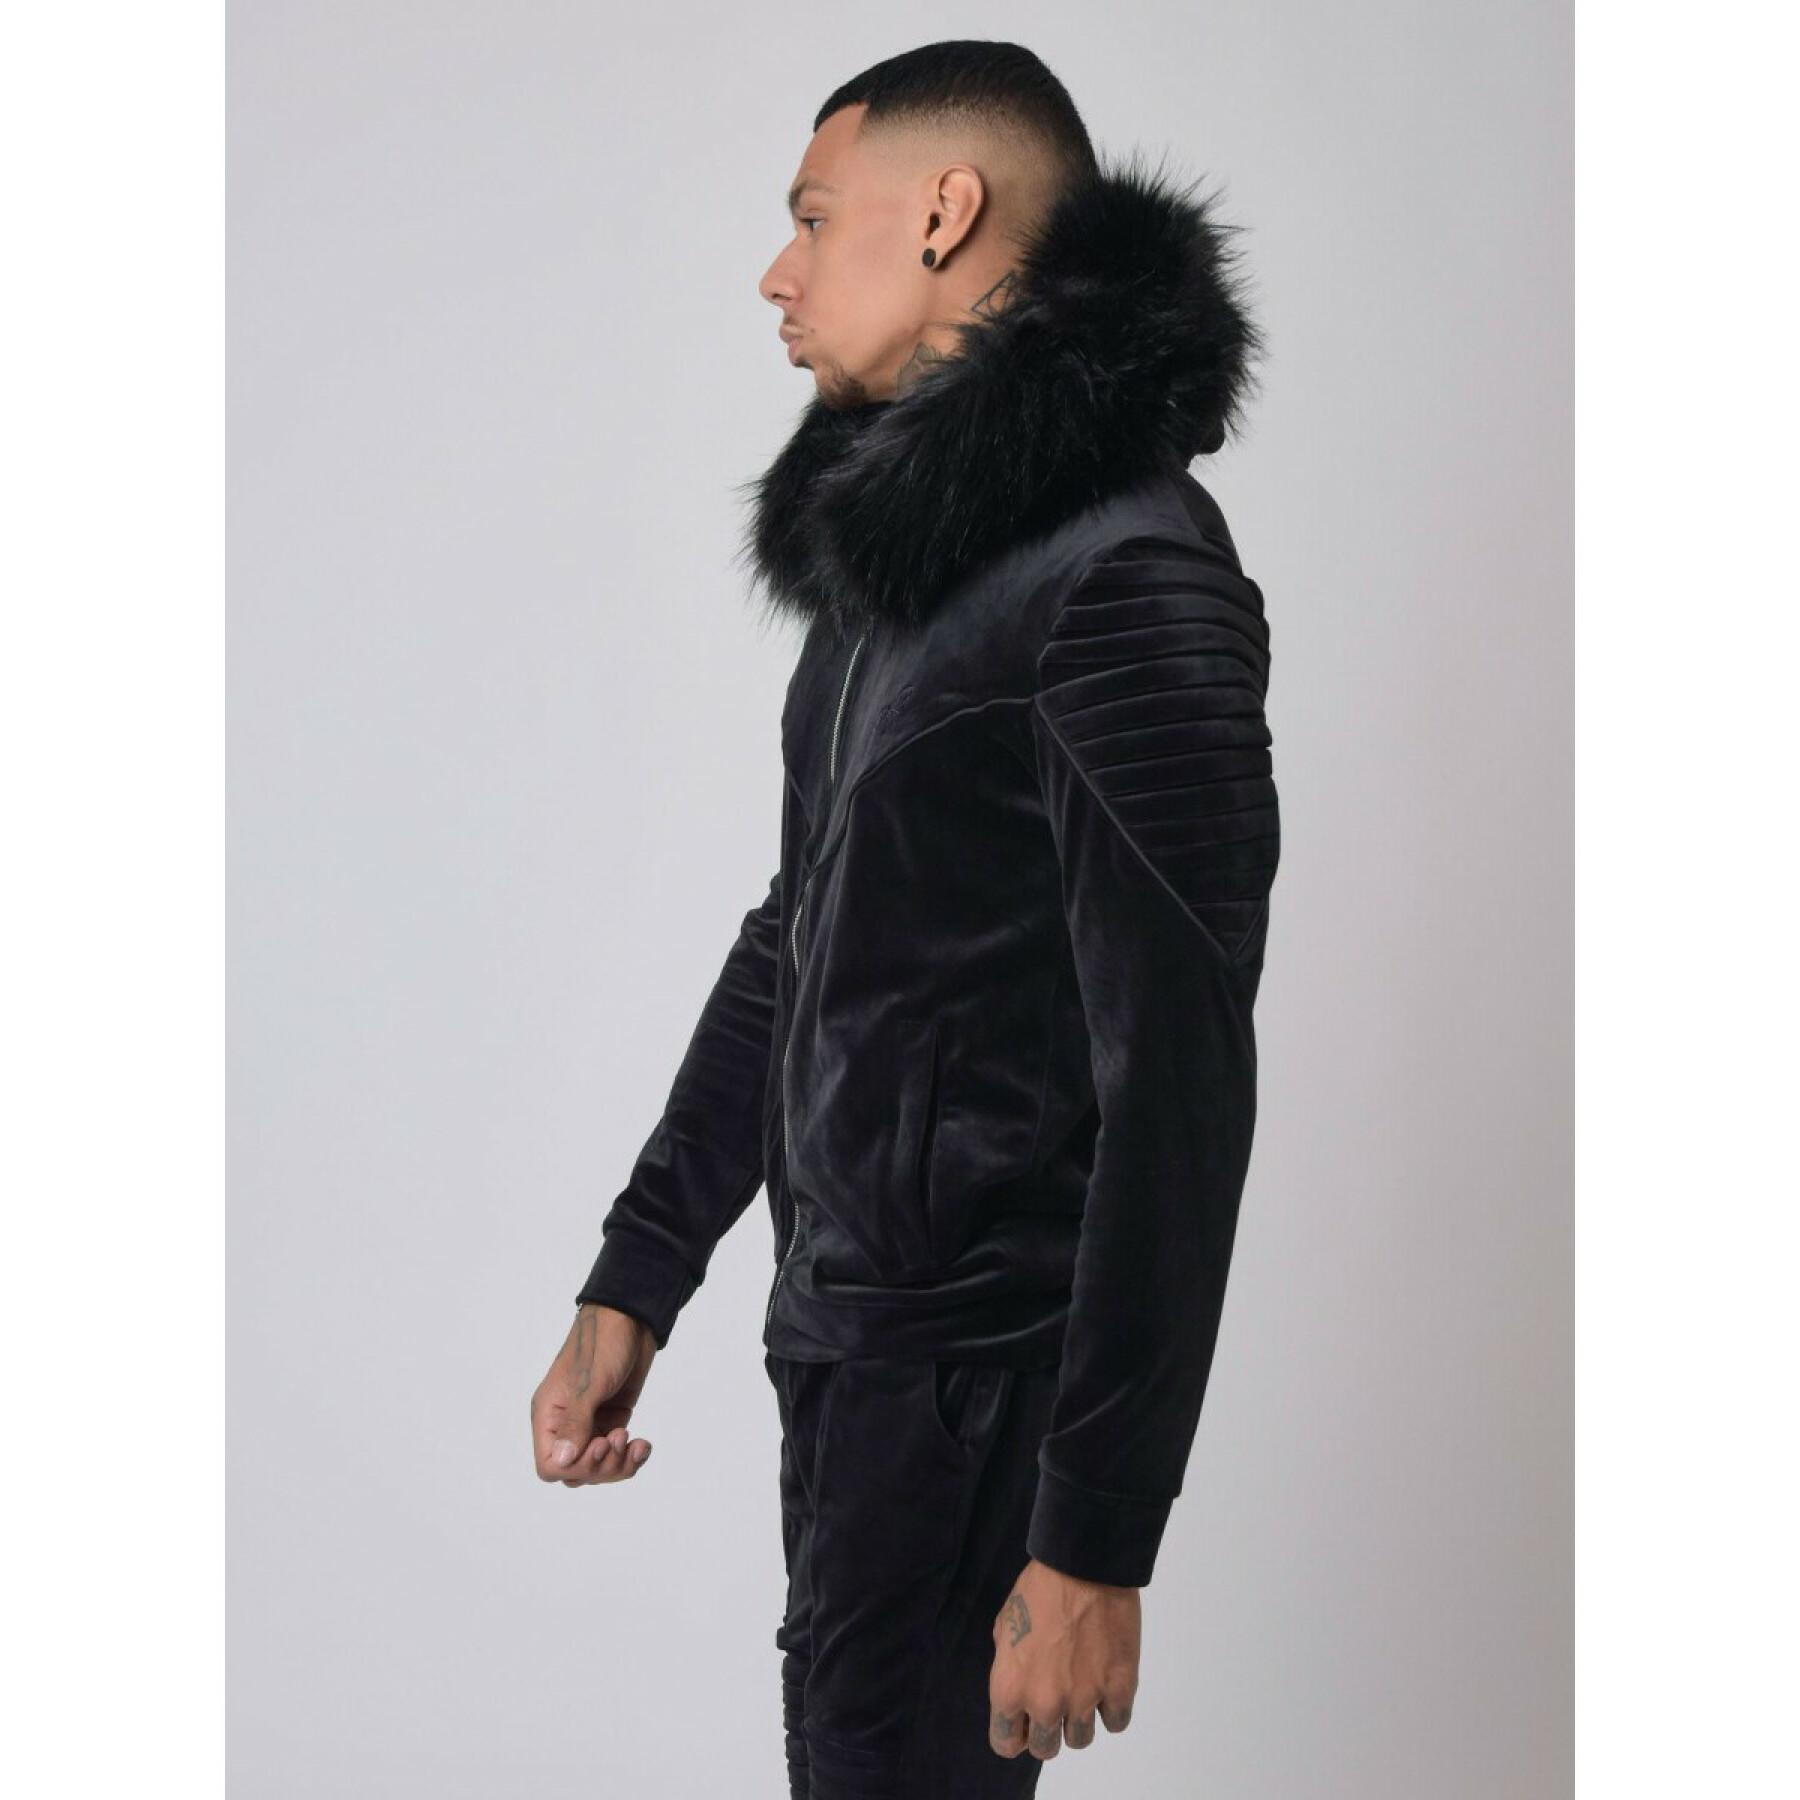 Hooded jacket Project X Paris velvet